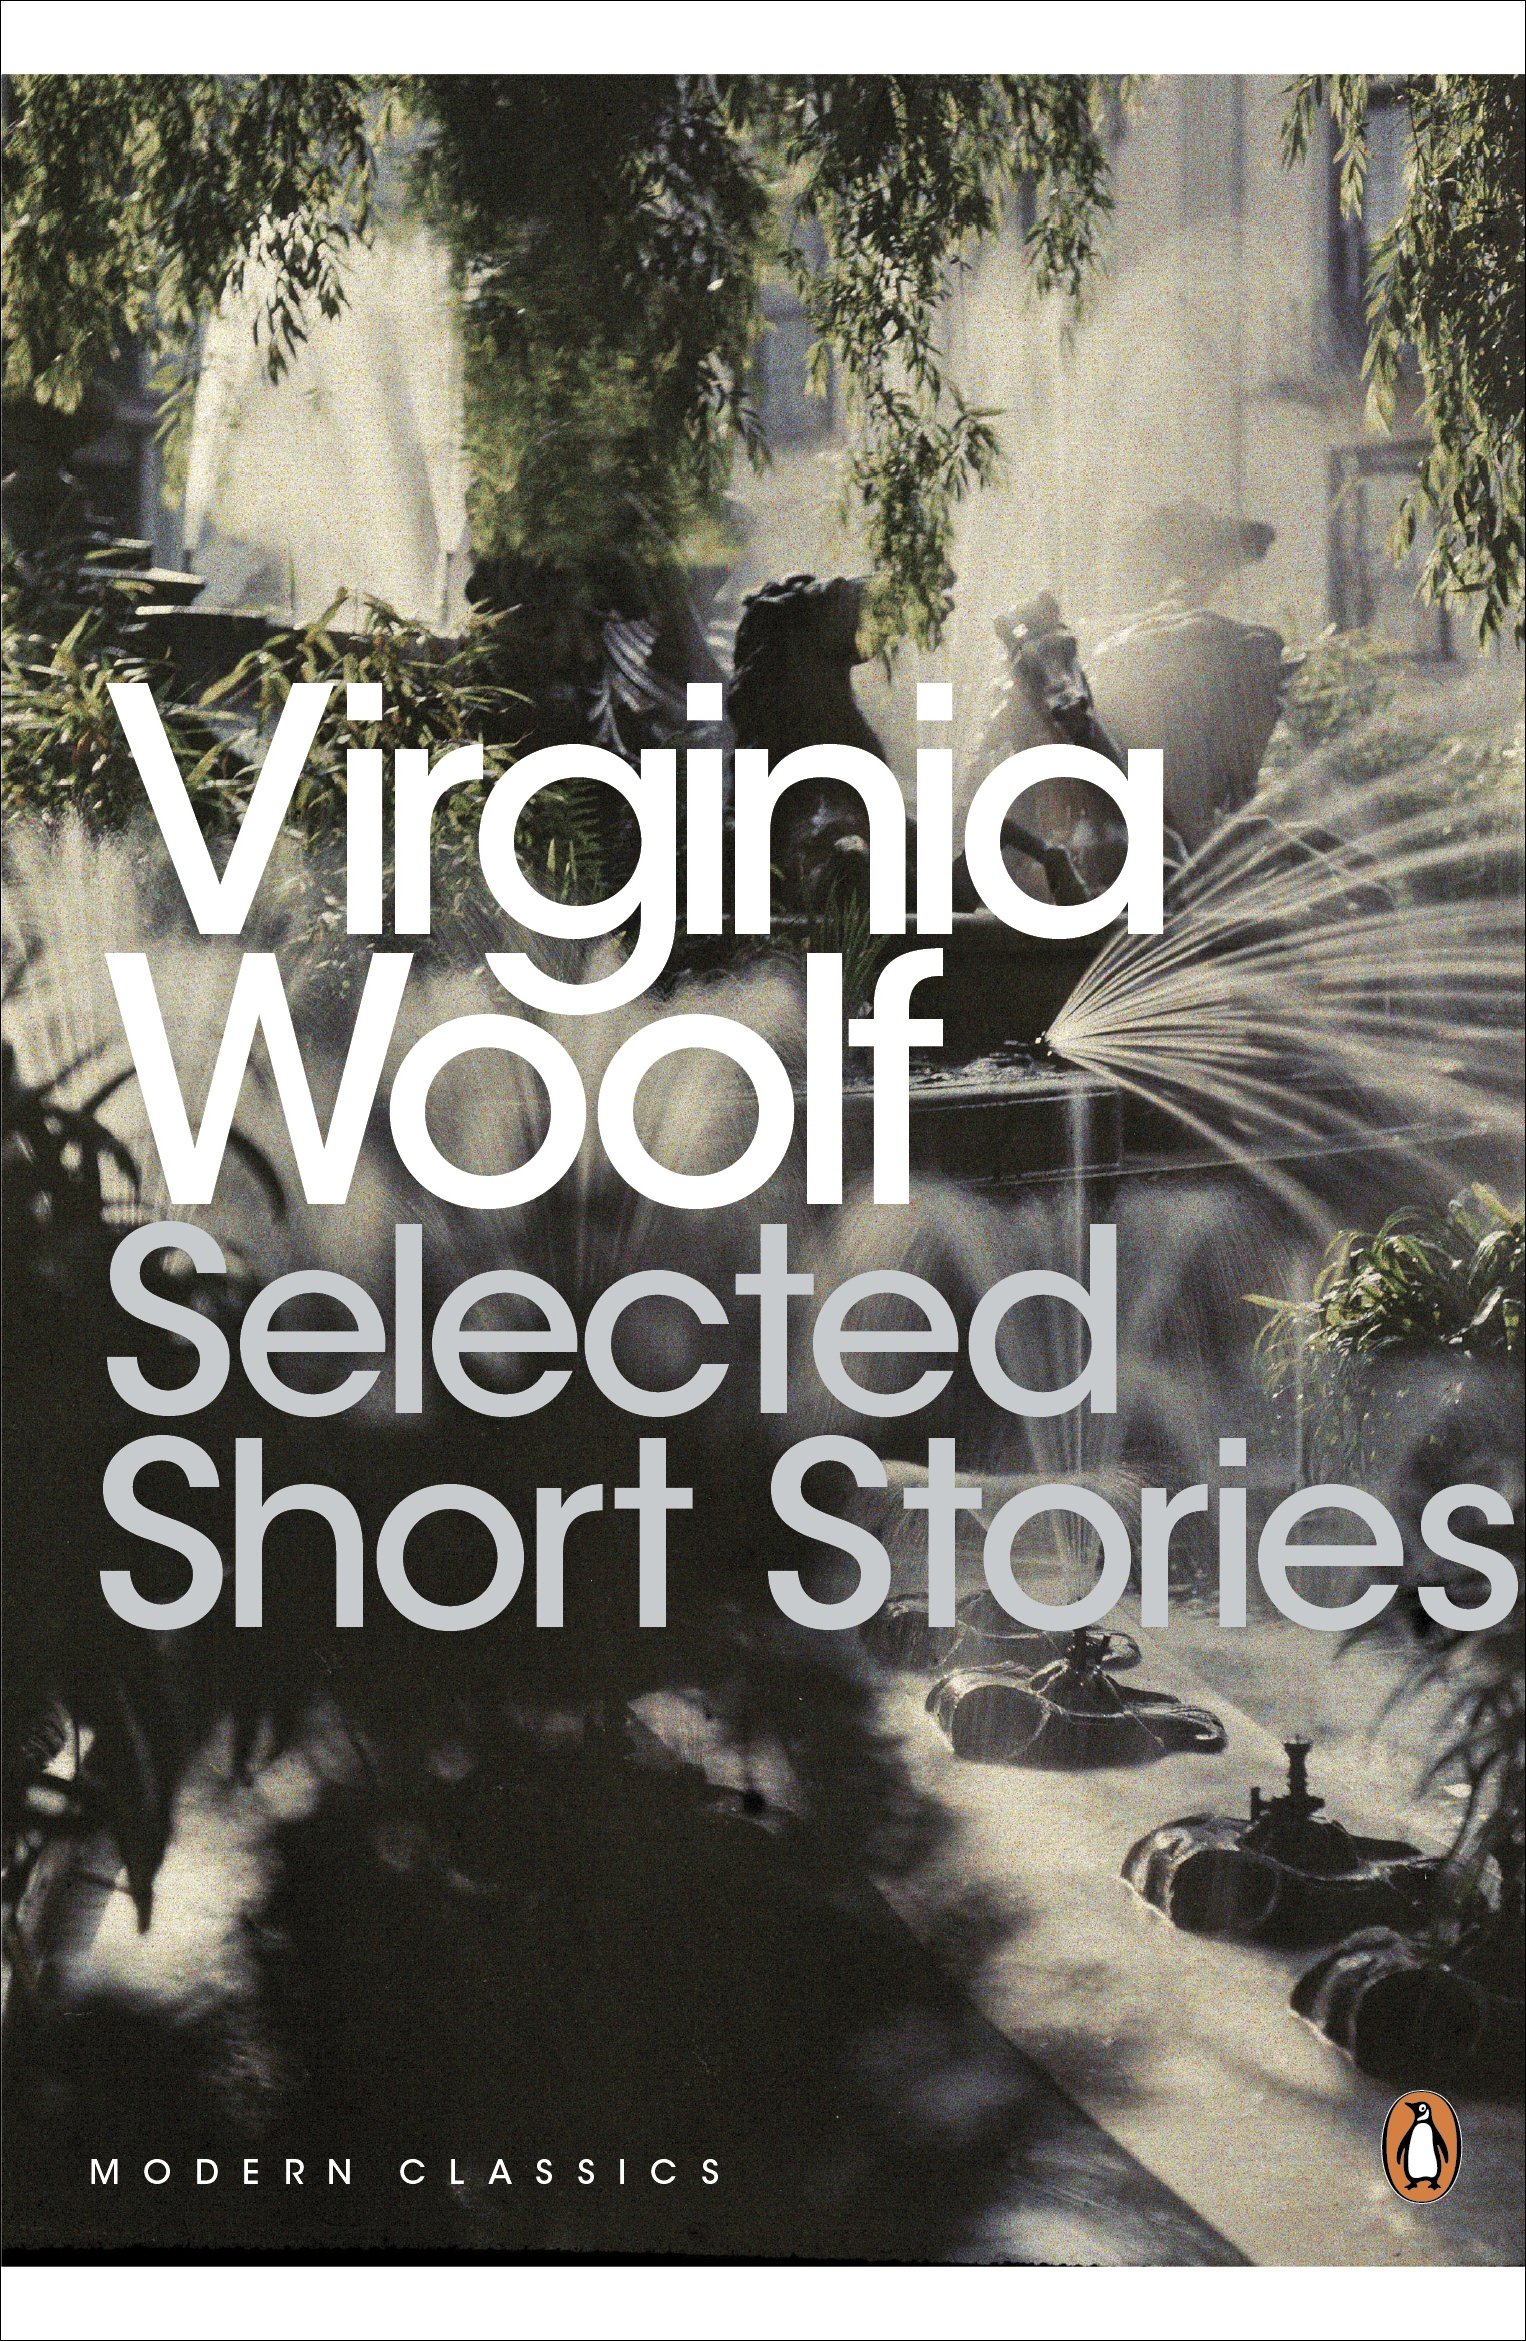 Viginia Woolf Selected Short Stories [Modern Classics]